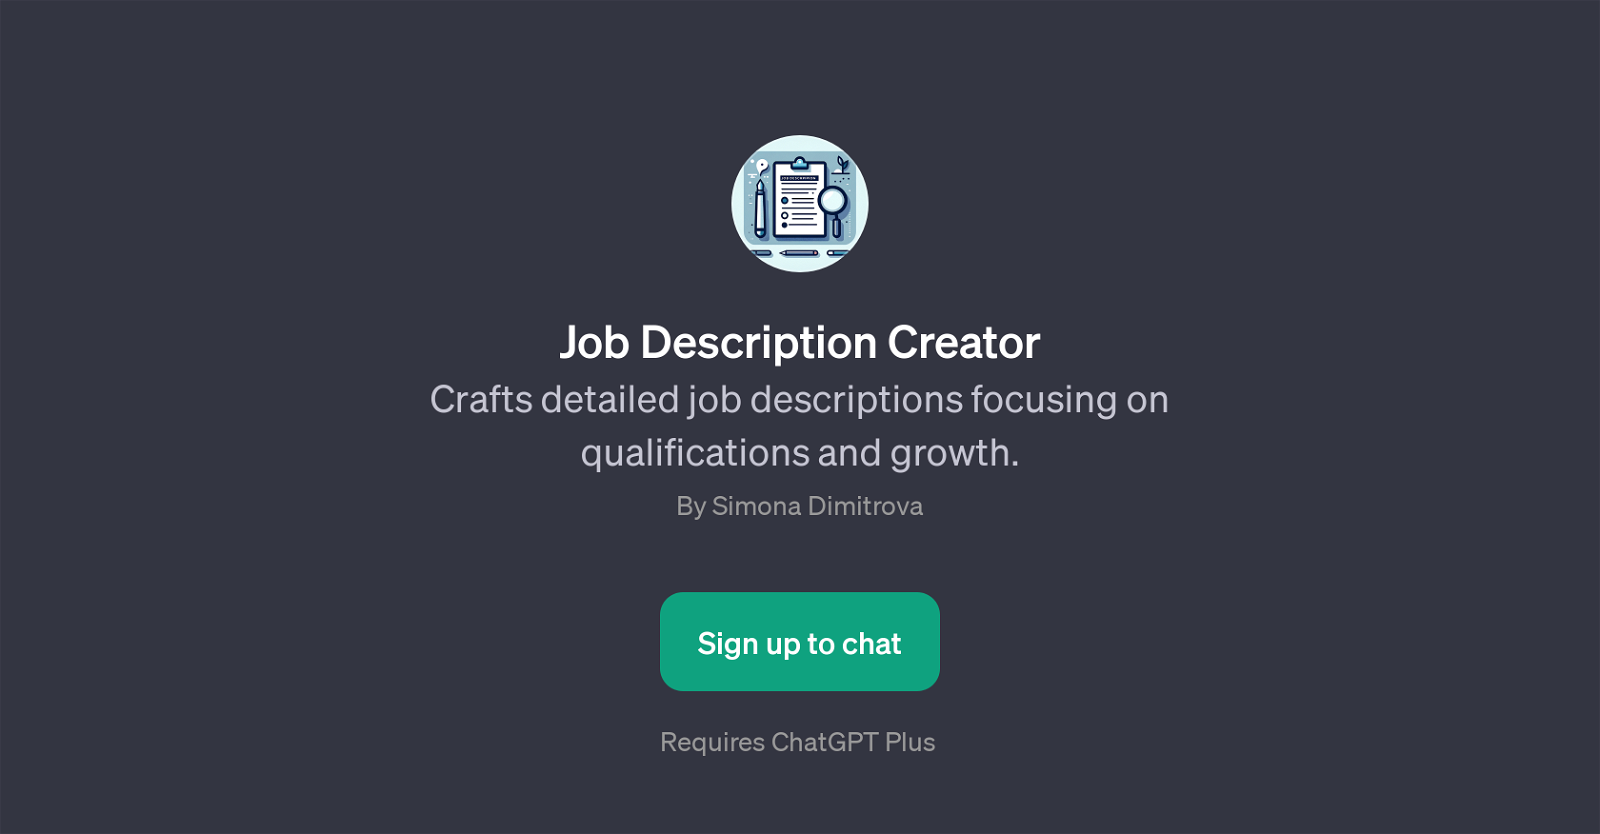 Job Description Creator website